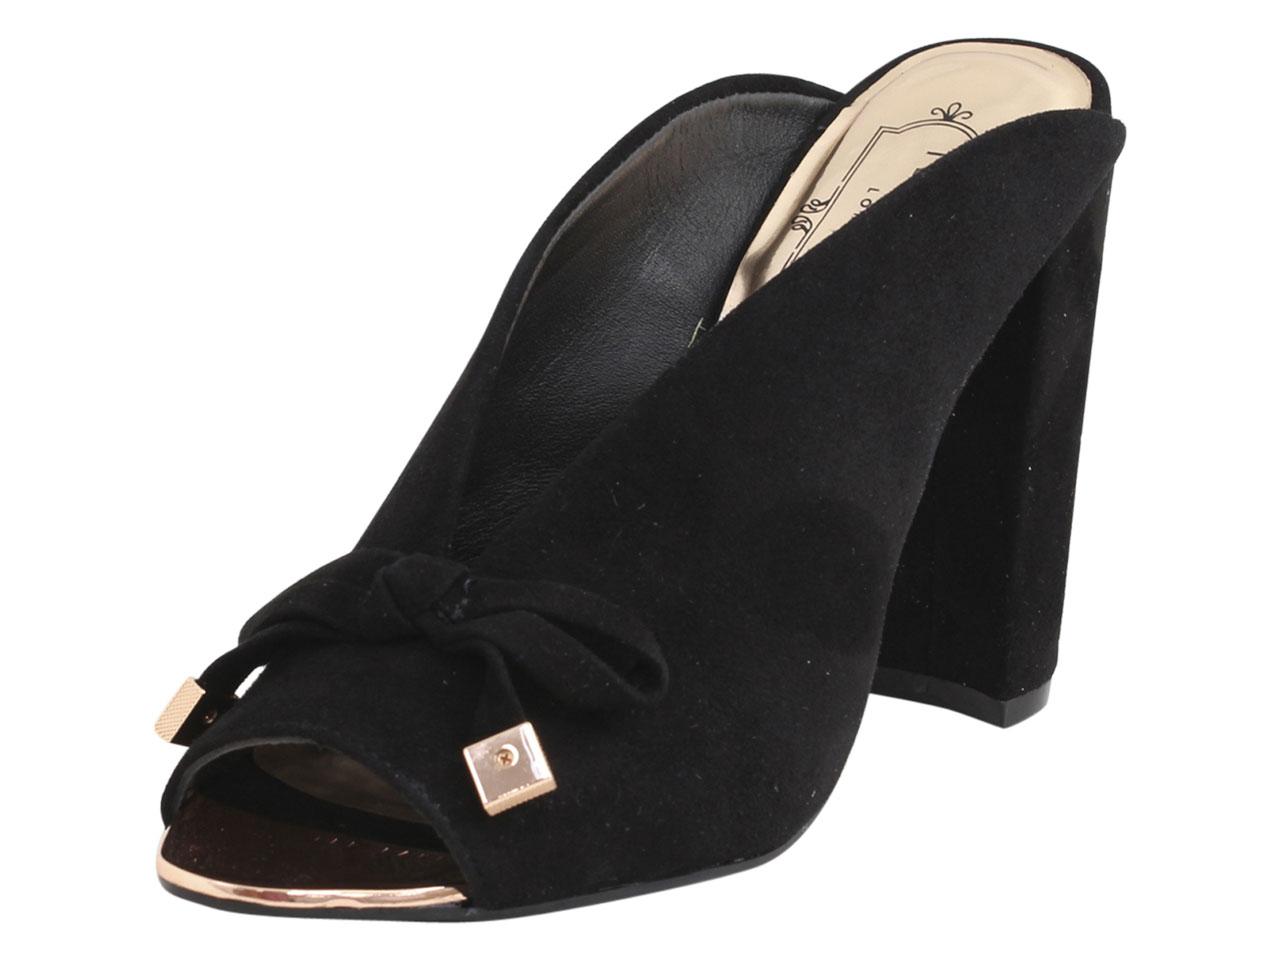 Ted Baker Women's Marinax Pumps Heels Shoes - Black - 9 B(M) US